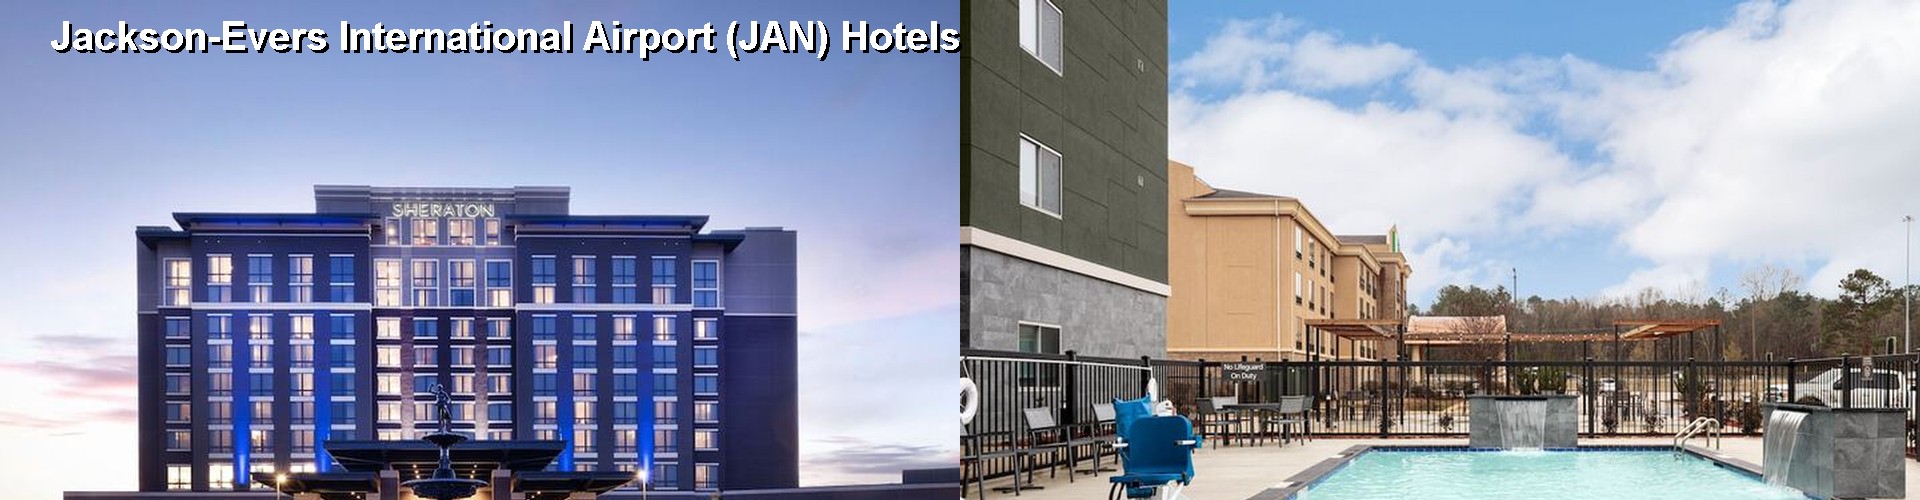 5 Best Hotels near Jackson-Evers International Airport (JAN)